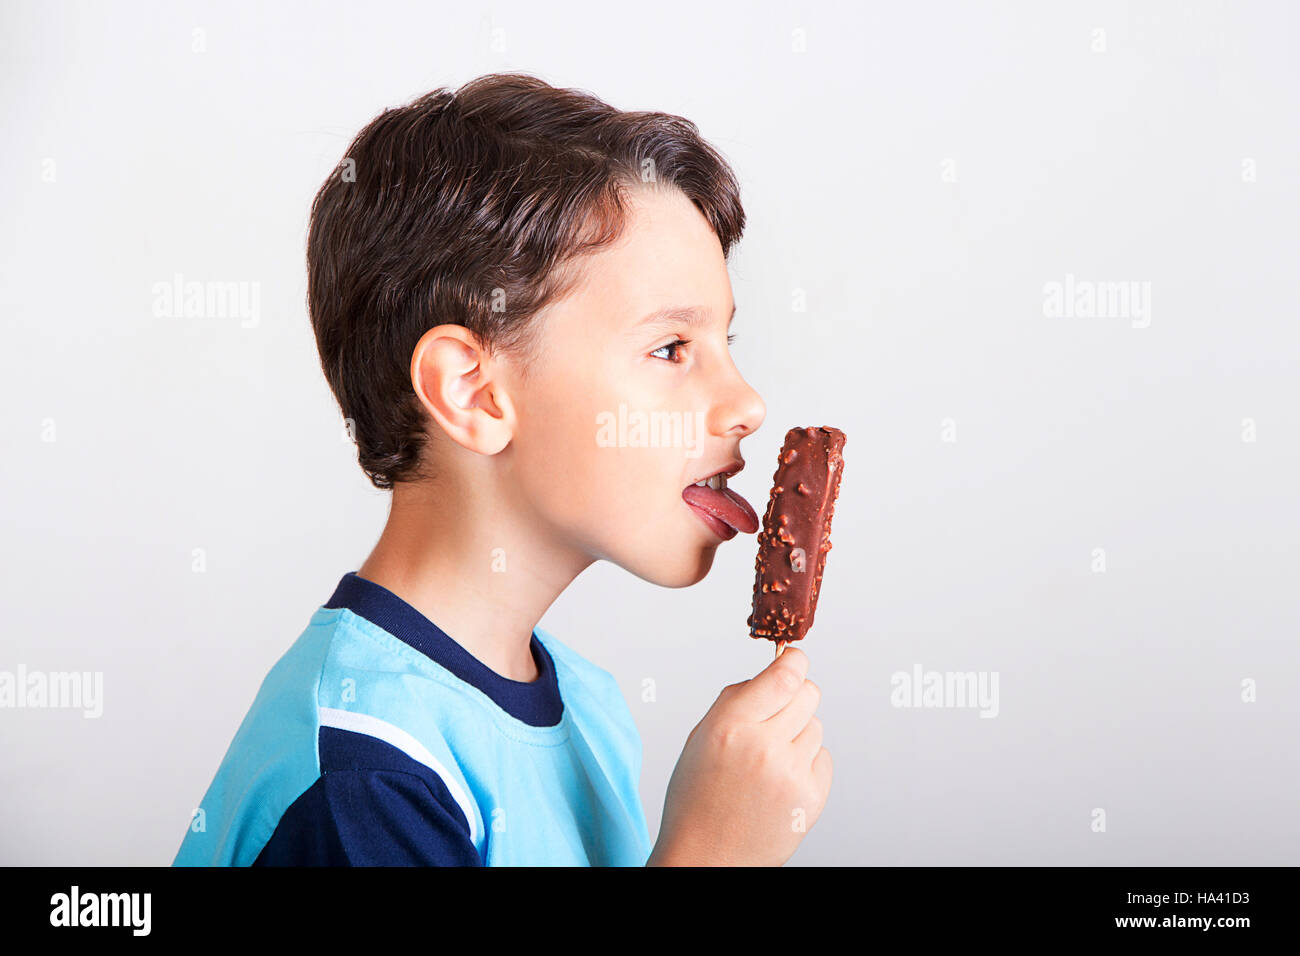 Young kid licking chocolate ice cream bar Stock Photo